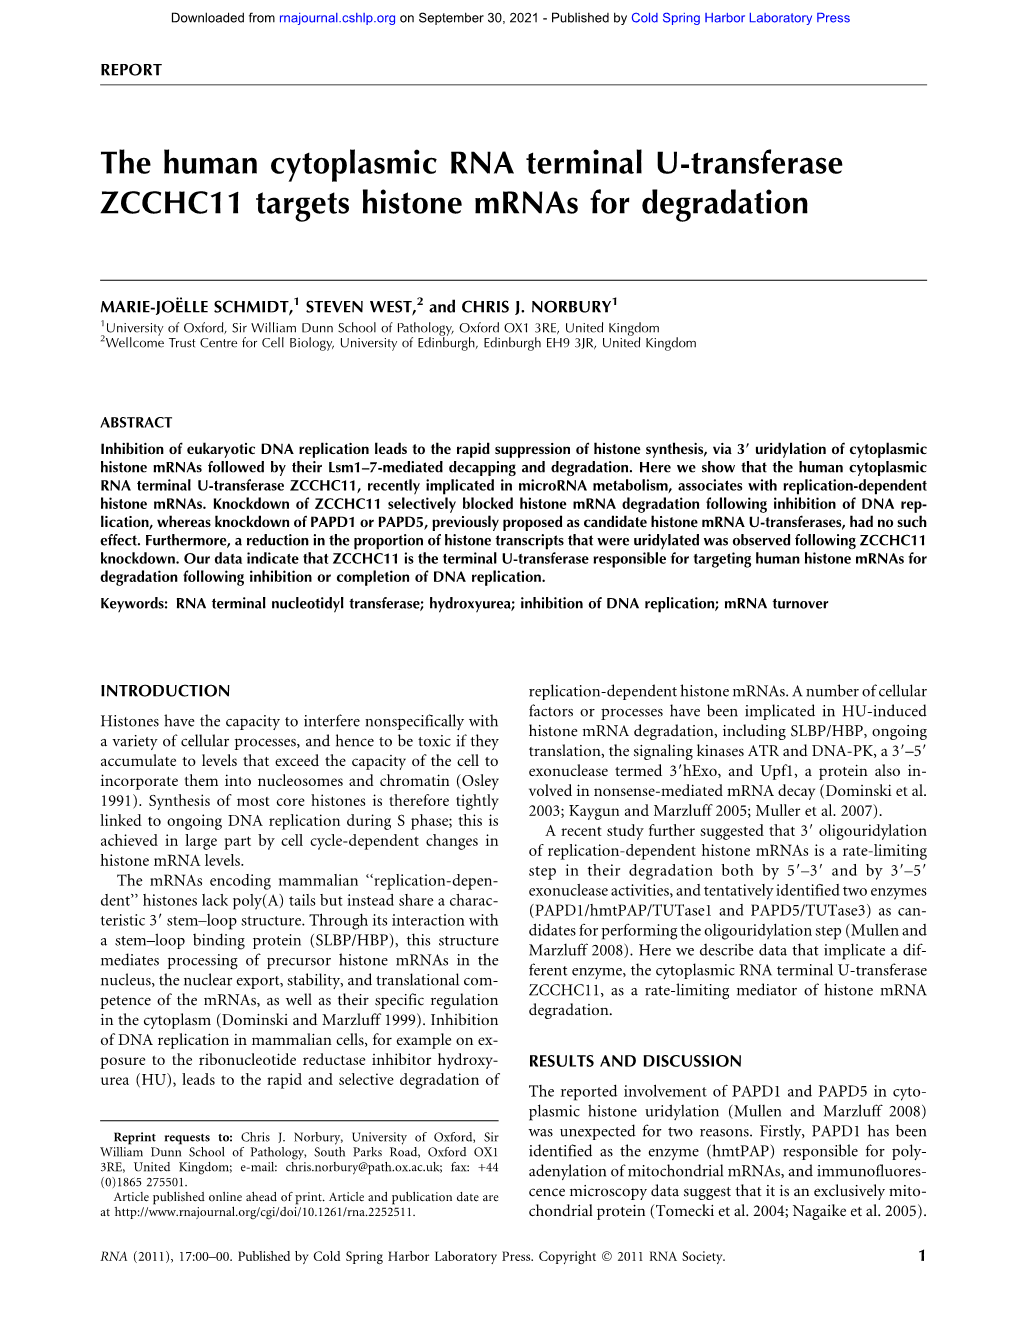 The Human Cytoplasmic RNA Terminal U-Transferase ZCCHC11 Targets Histone Mrnas for Degradation